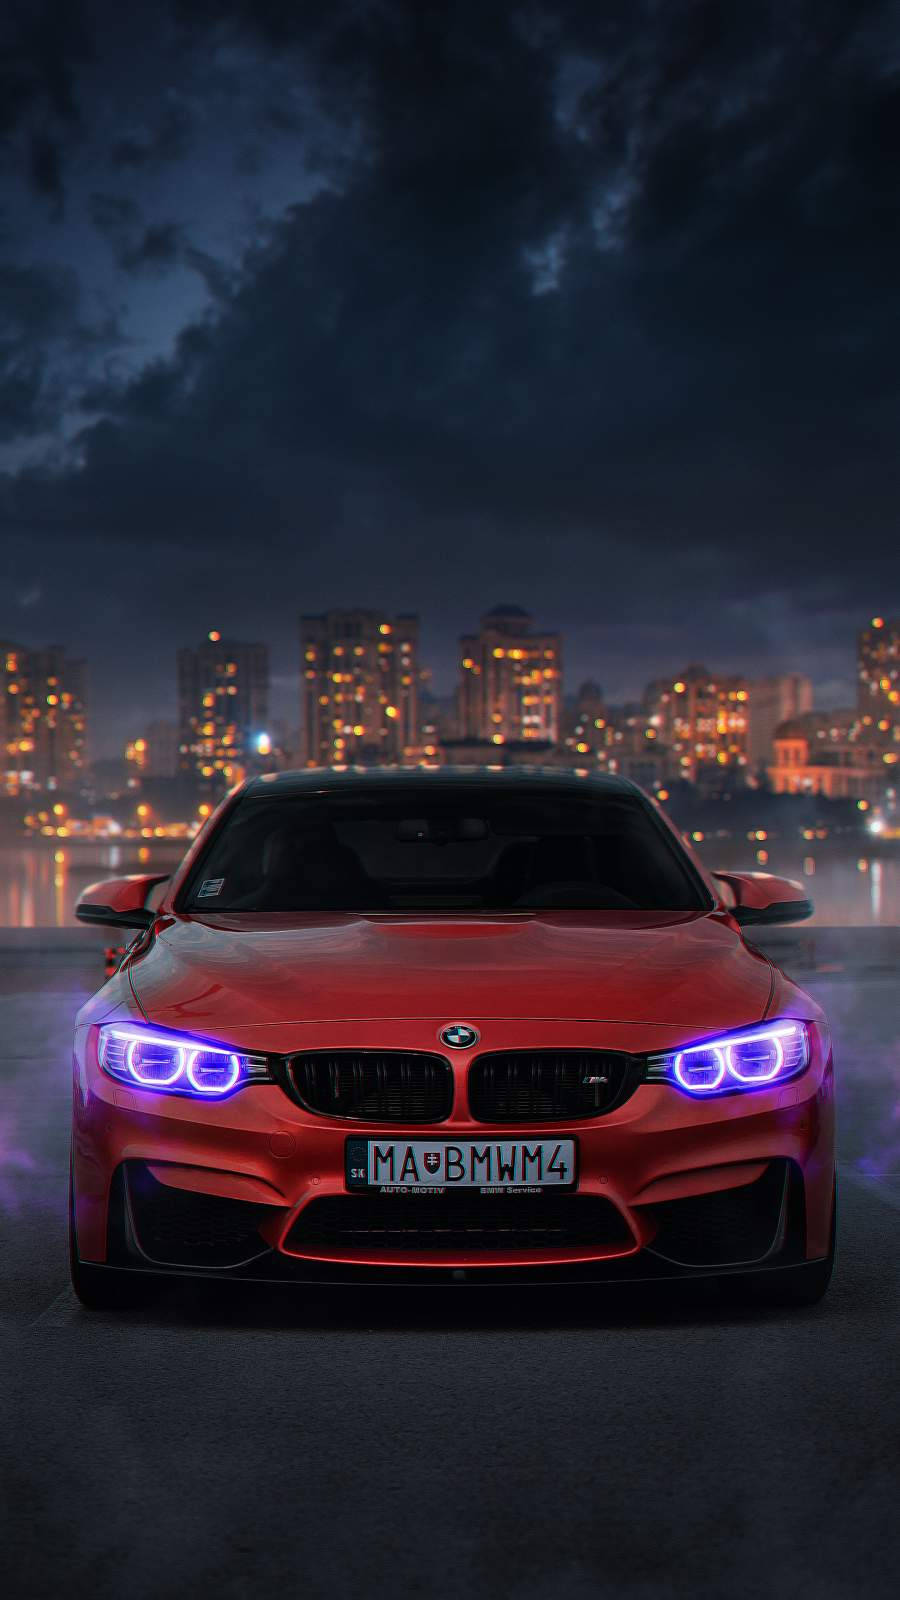 BMW M4 Cityscape iPhone Car Wallpaper